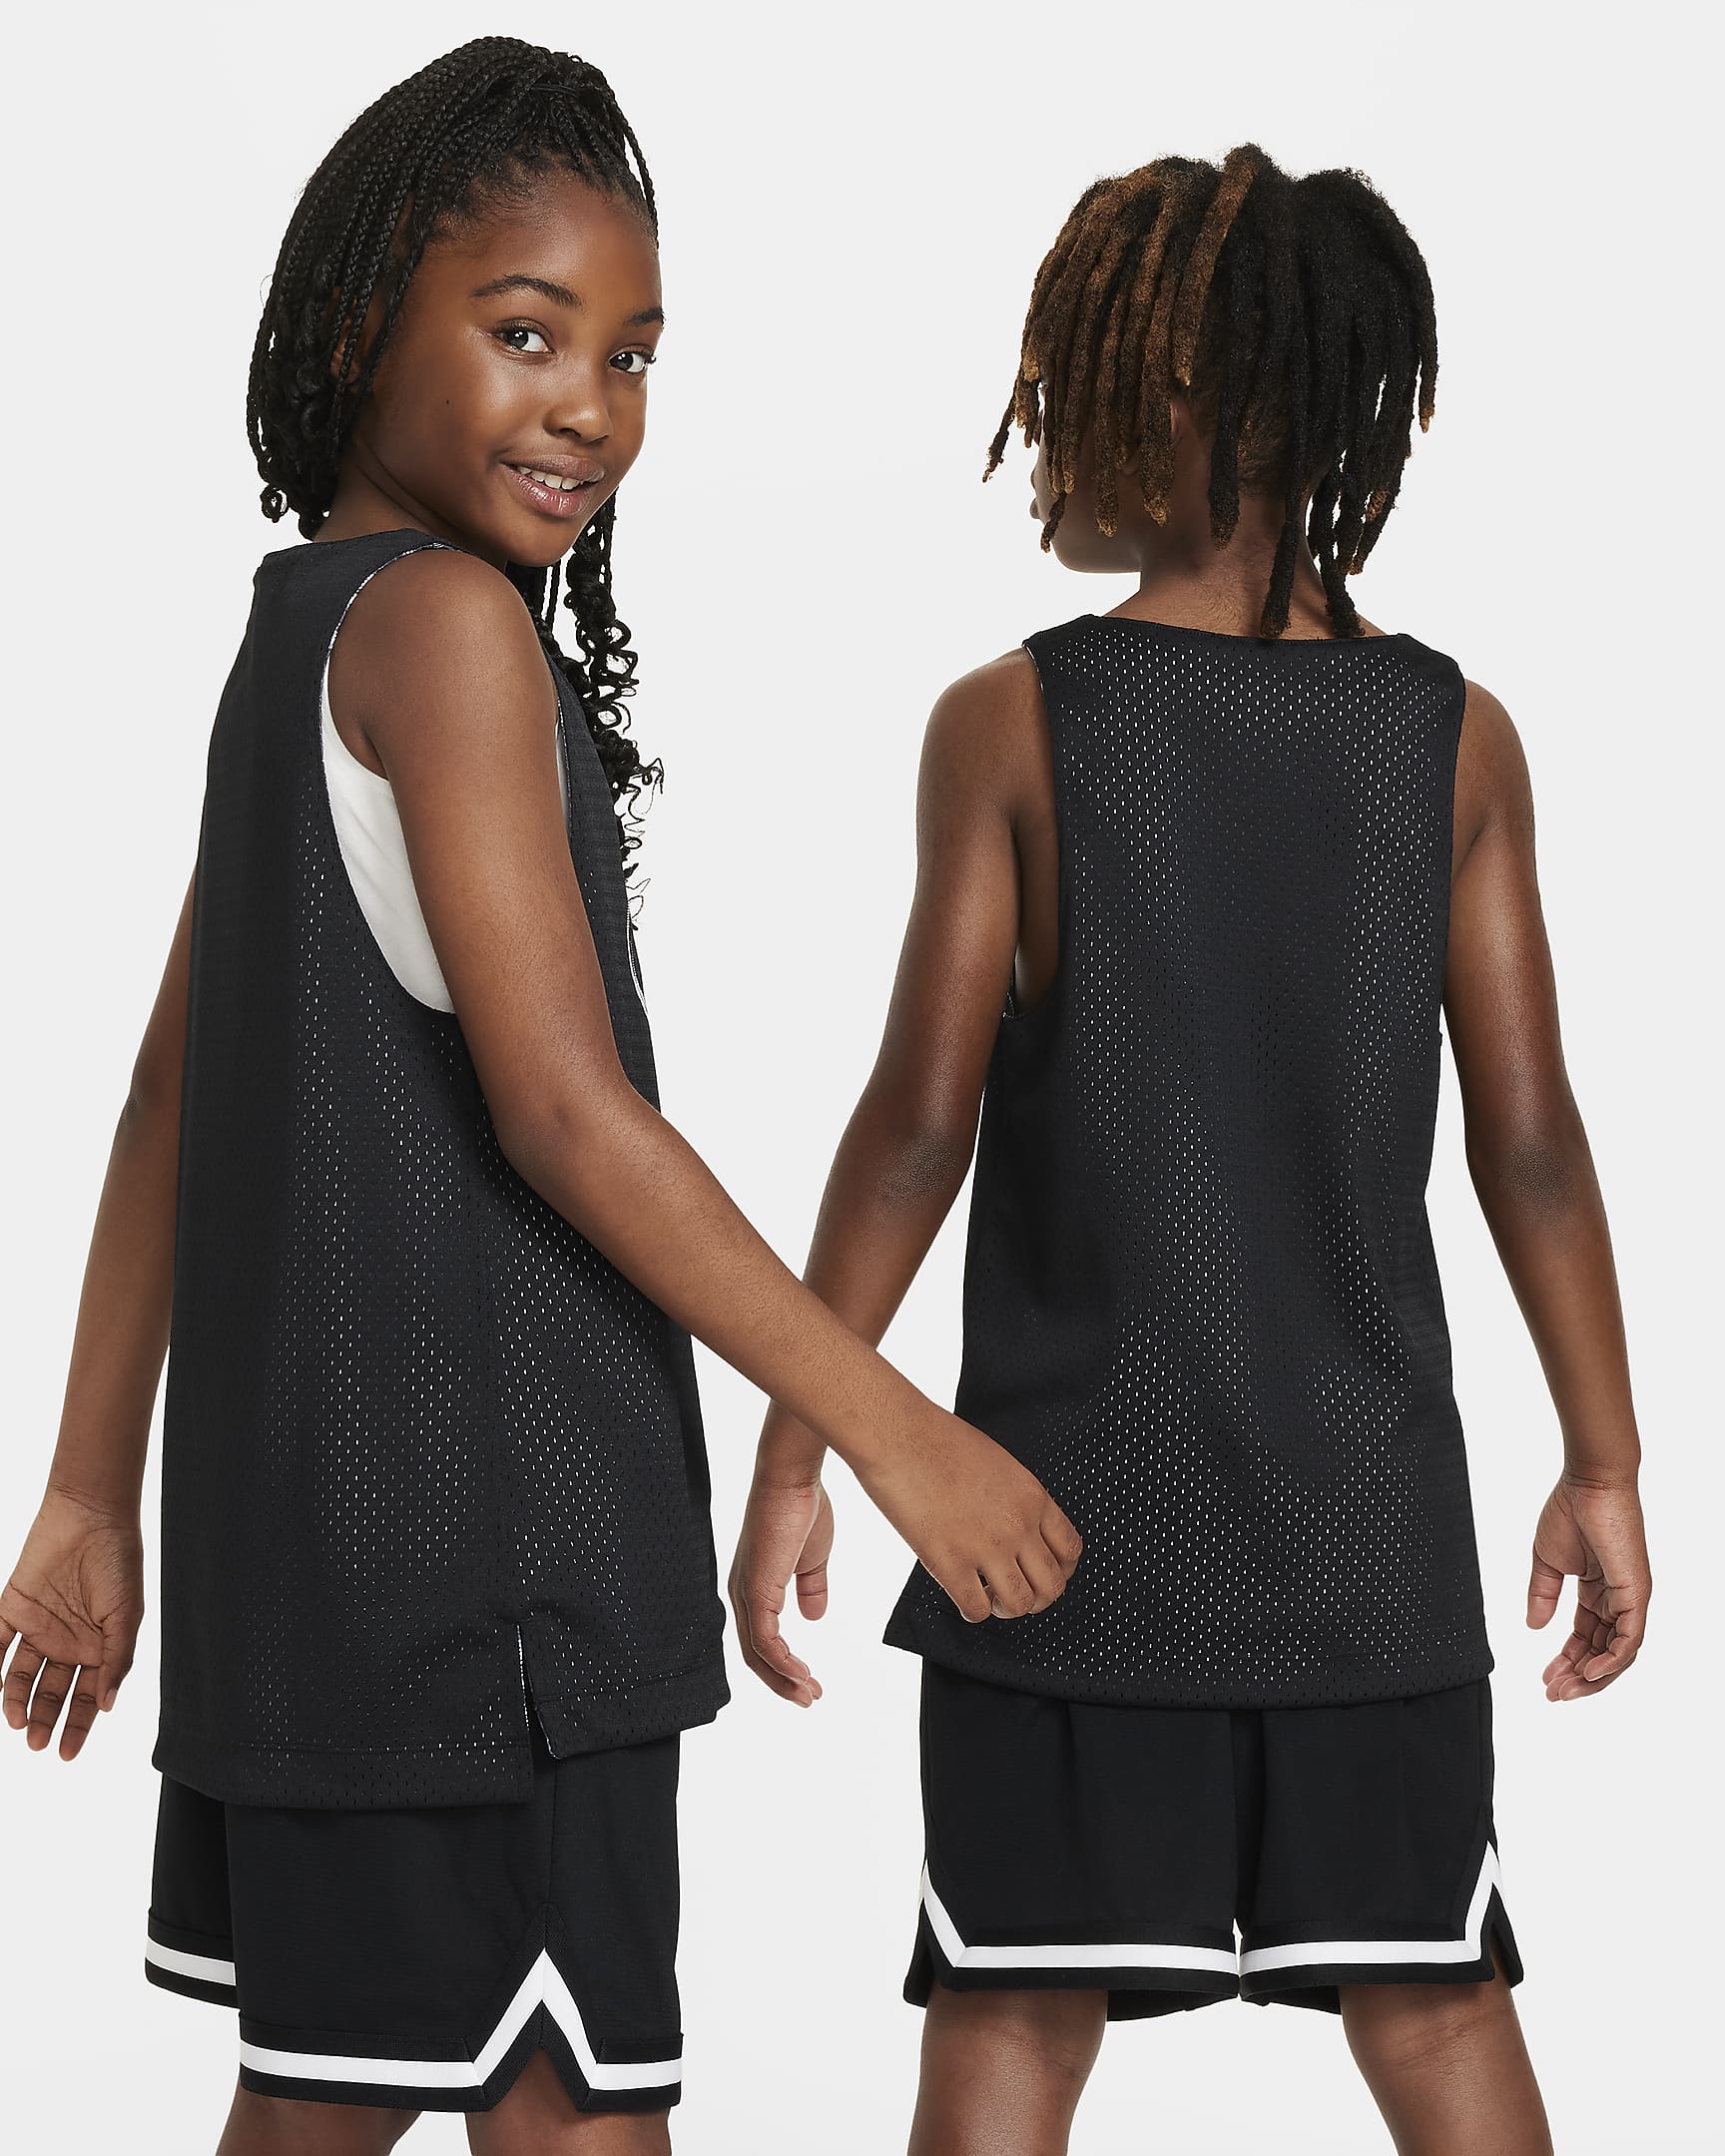 Nike Culture of Basketball Big Kids' Reversible Jersey. Nike JP